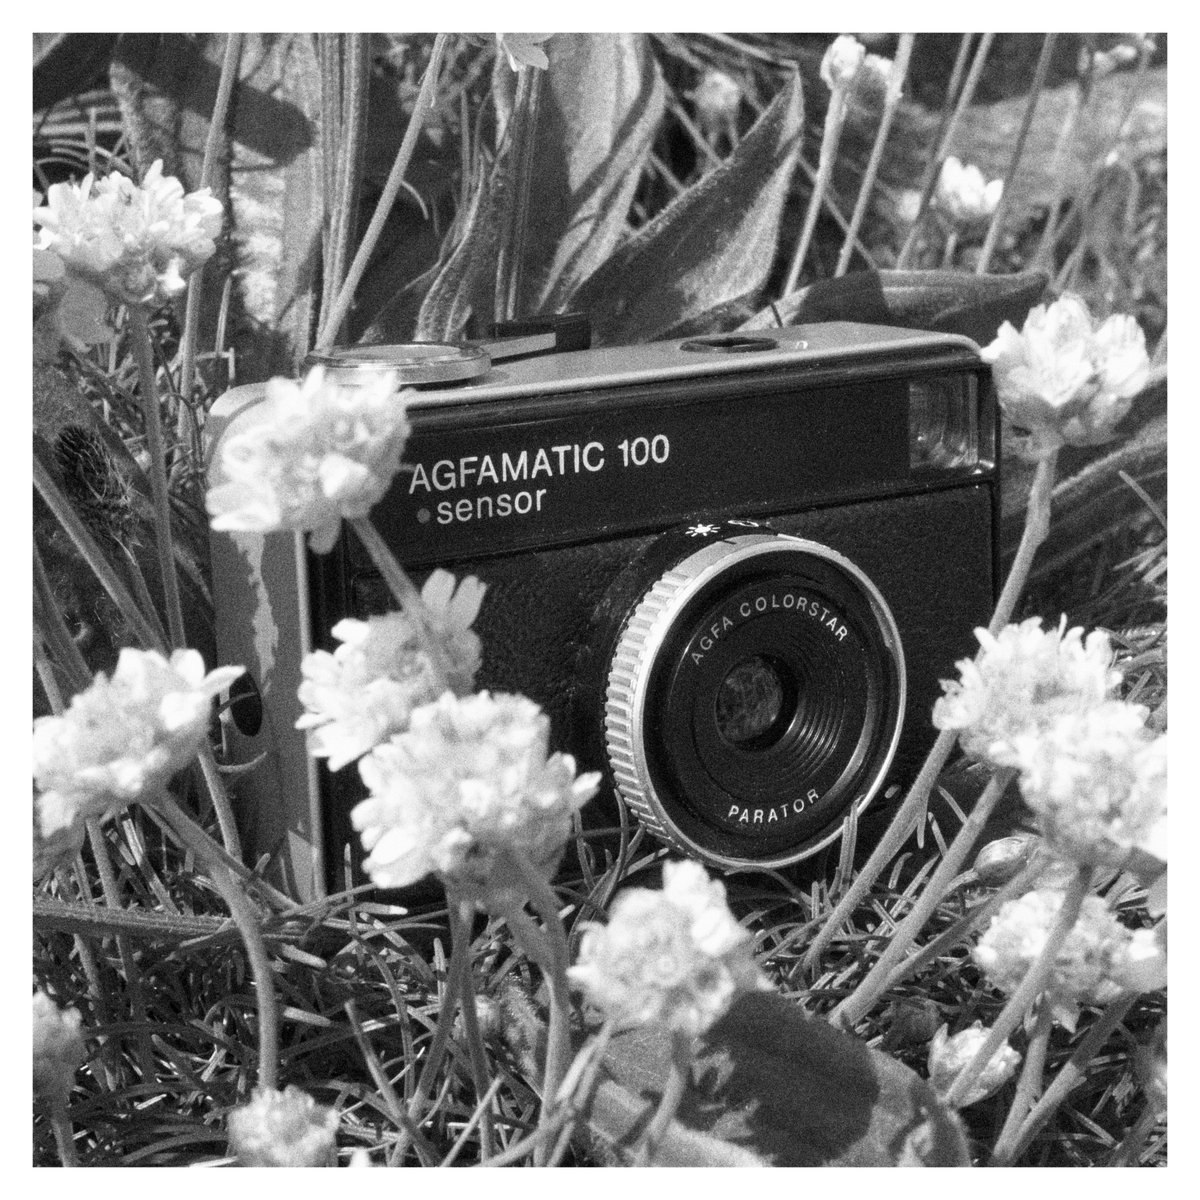 126 Creative
Agfamatic Sensor 100 
#bnw #bnwphotography #blackandwhite #blackandwhitephotography #monochrome #126film #vintage #lomography #filmcamera #126camera #agfacamera